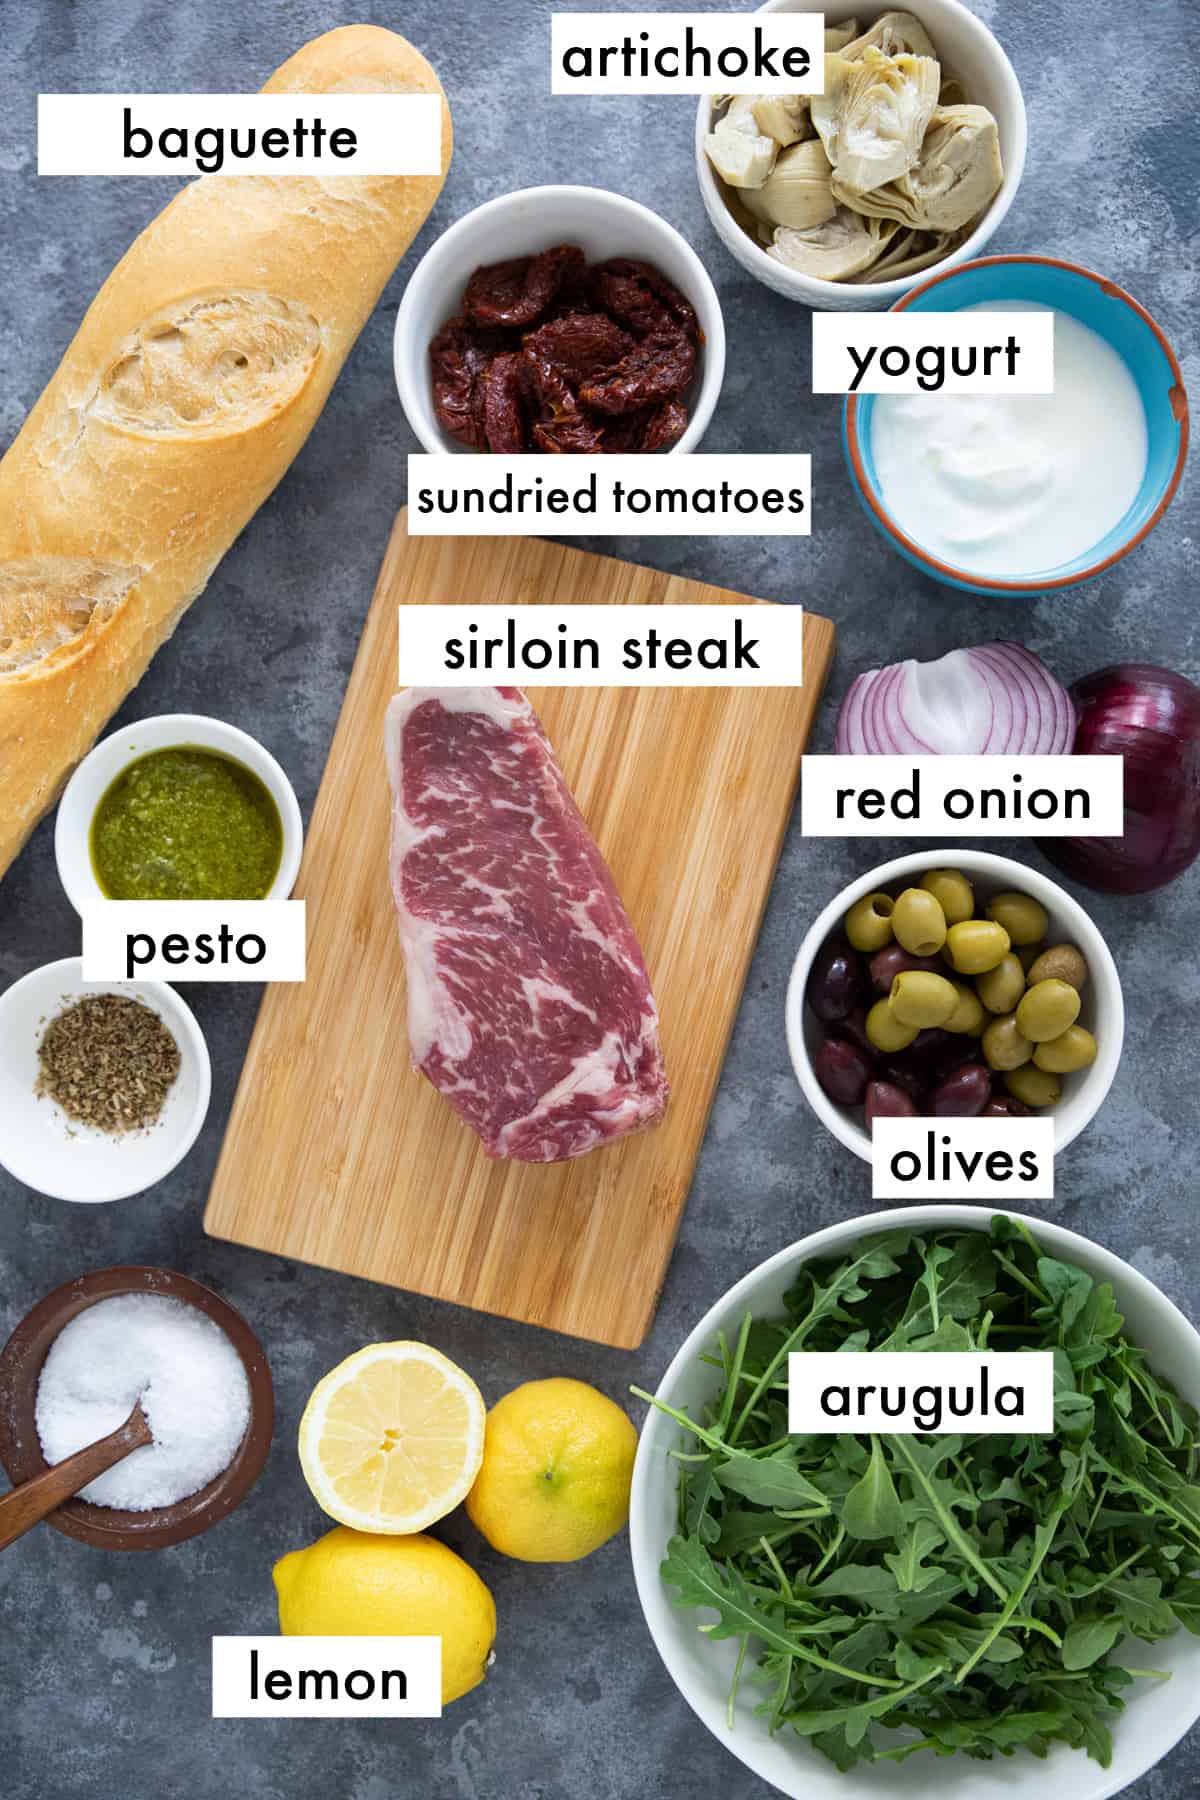 for this recipe you need steak, vegetables, pesto, arugula and yogurt. 